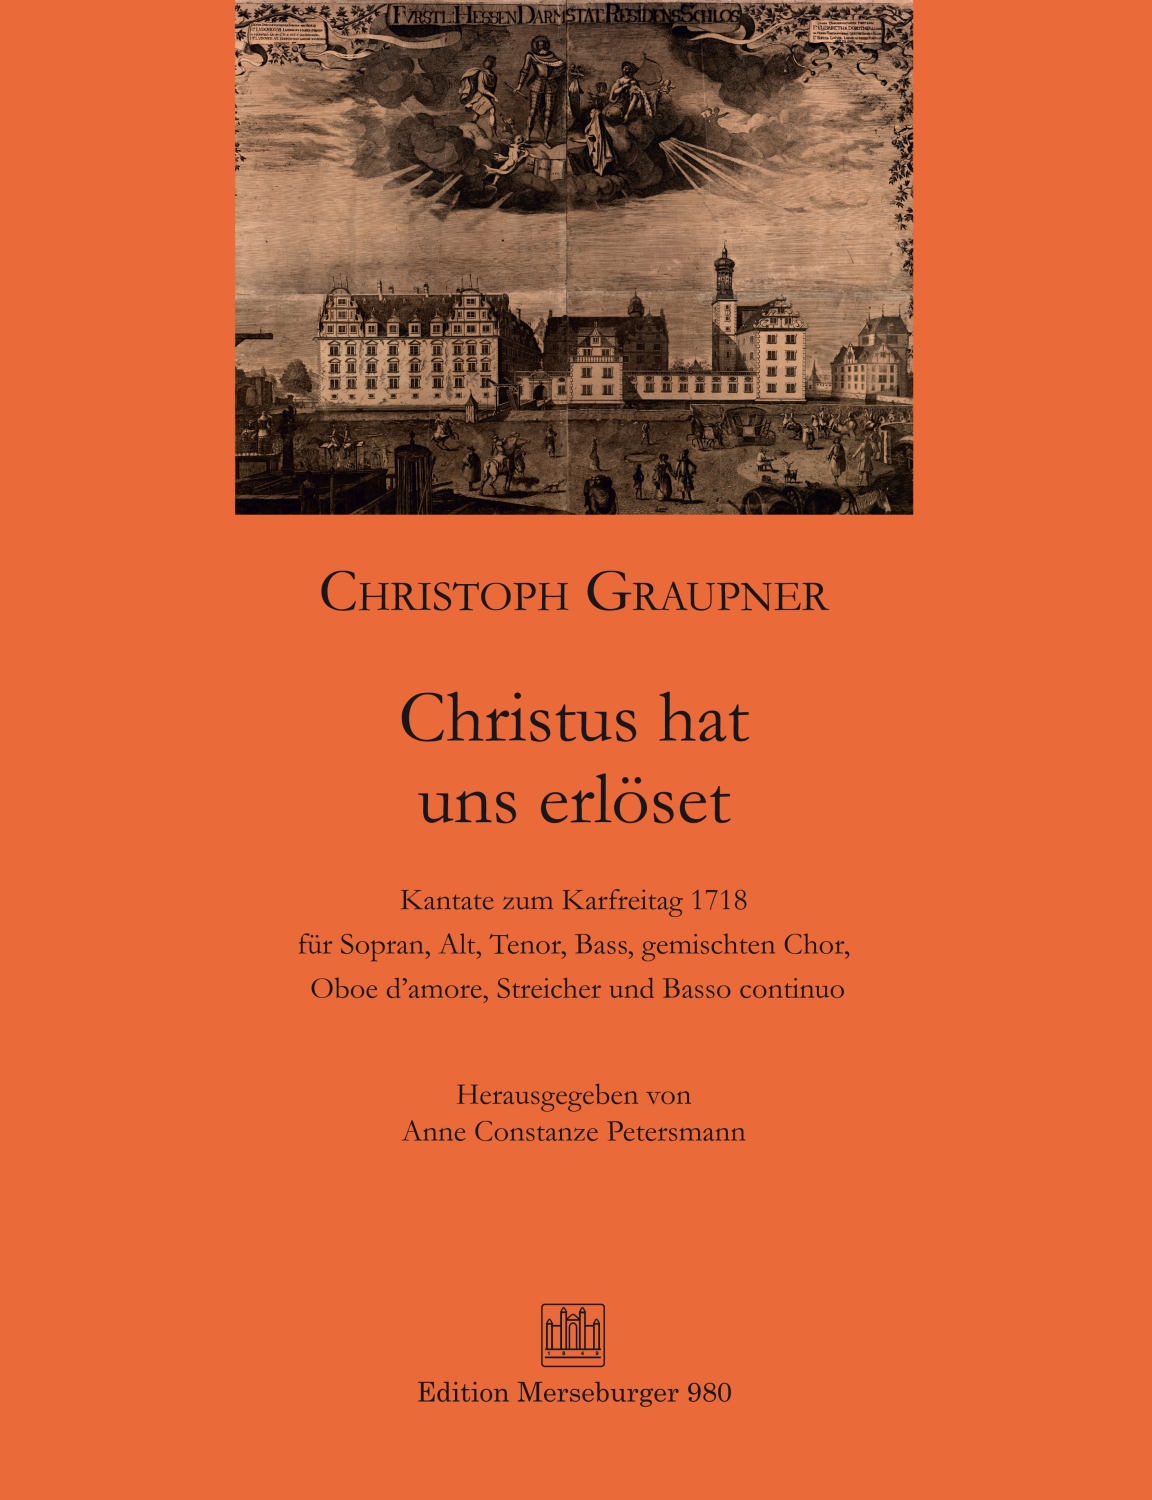 christoph-graupner-christus-hat-uns-erloeset-gemch_0001.JPG